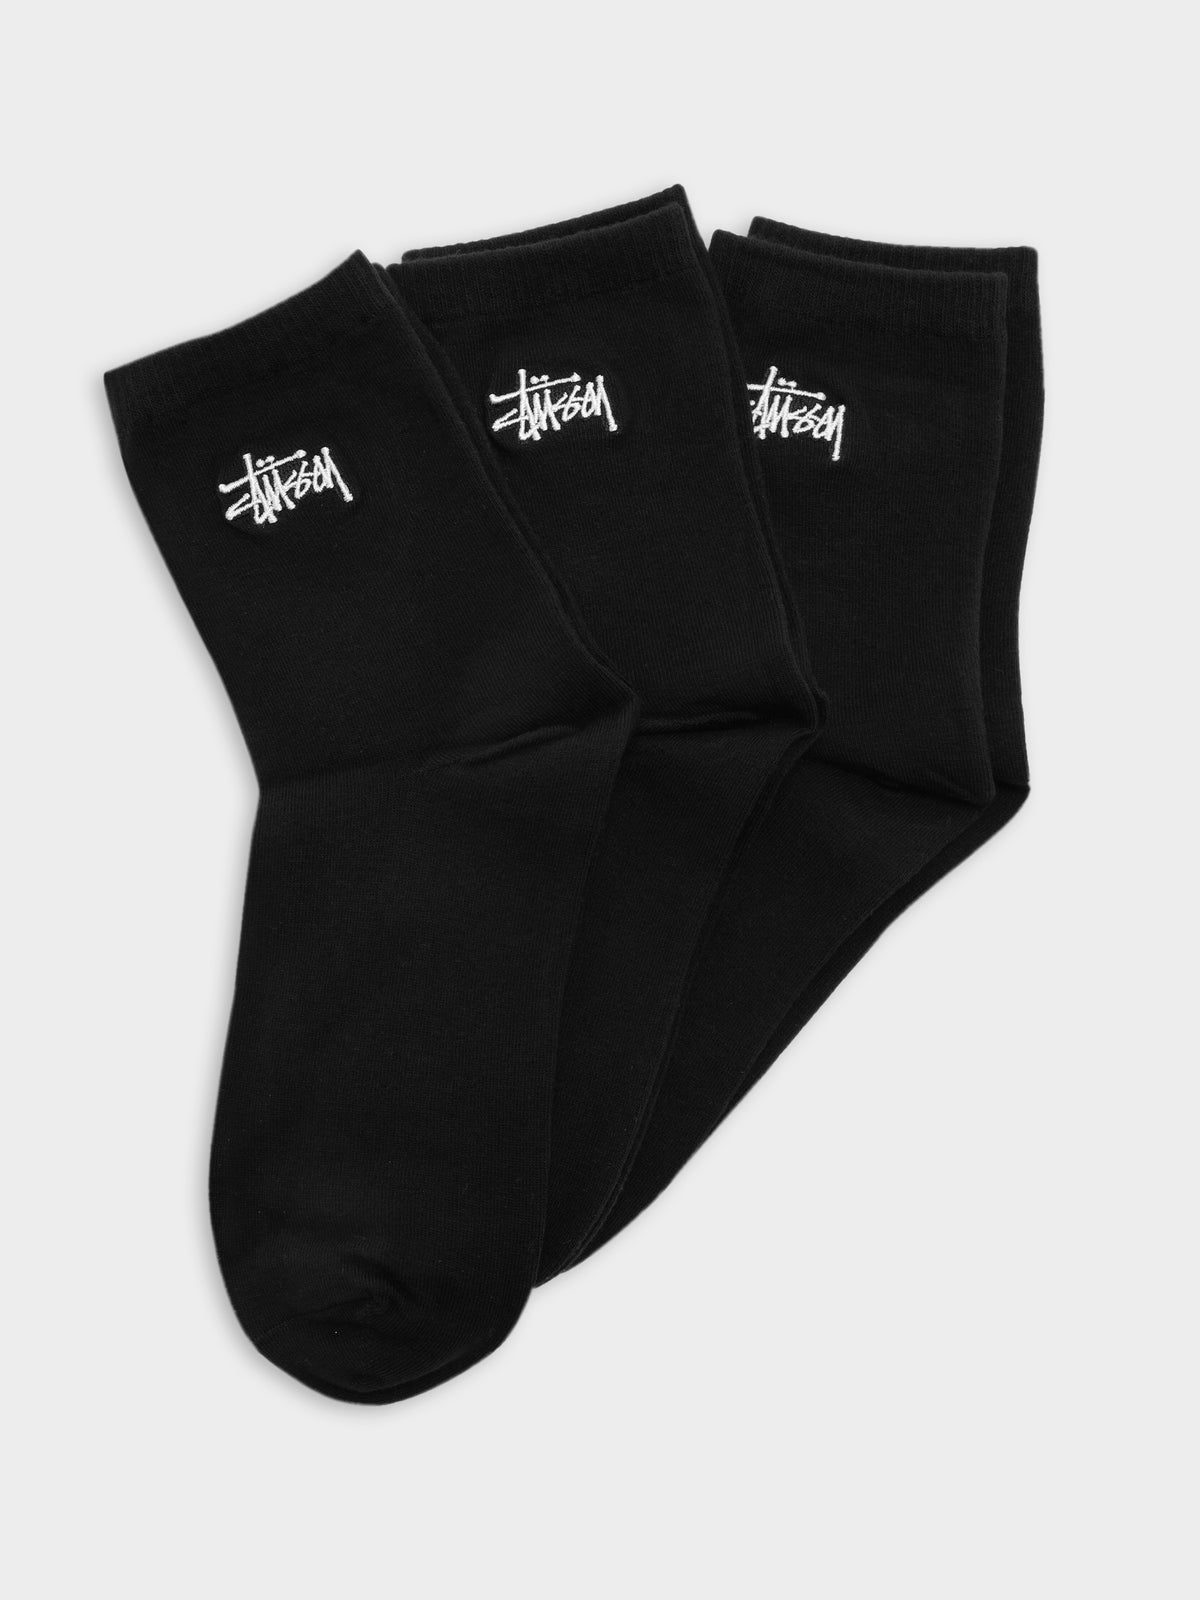 3 Pairs of Graffiti Socks in Black